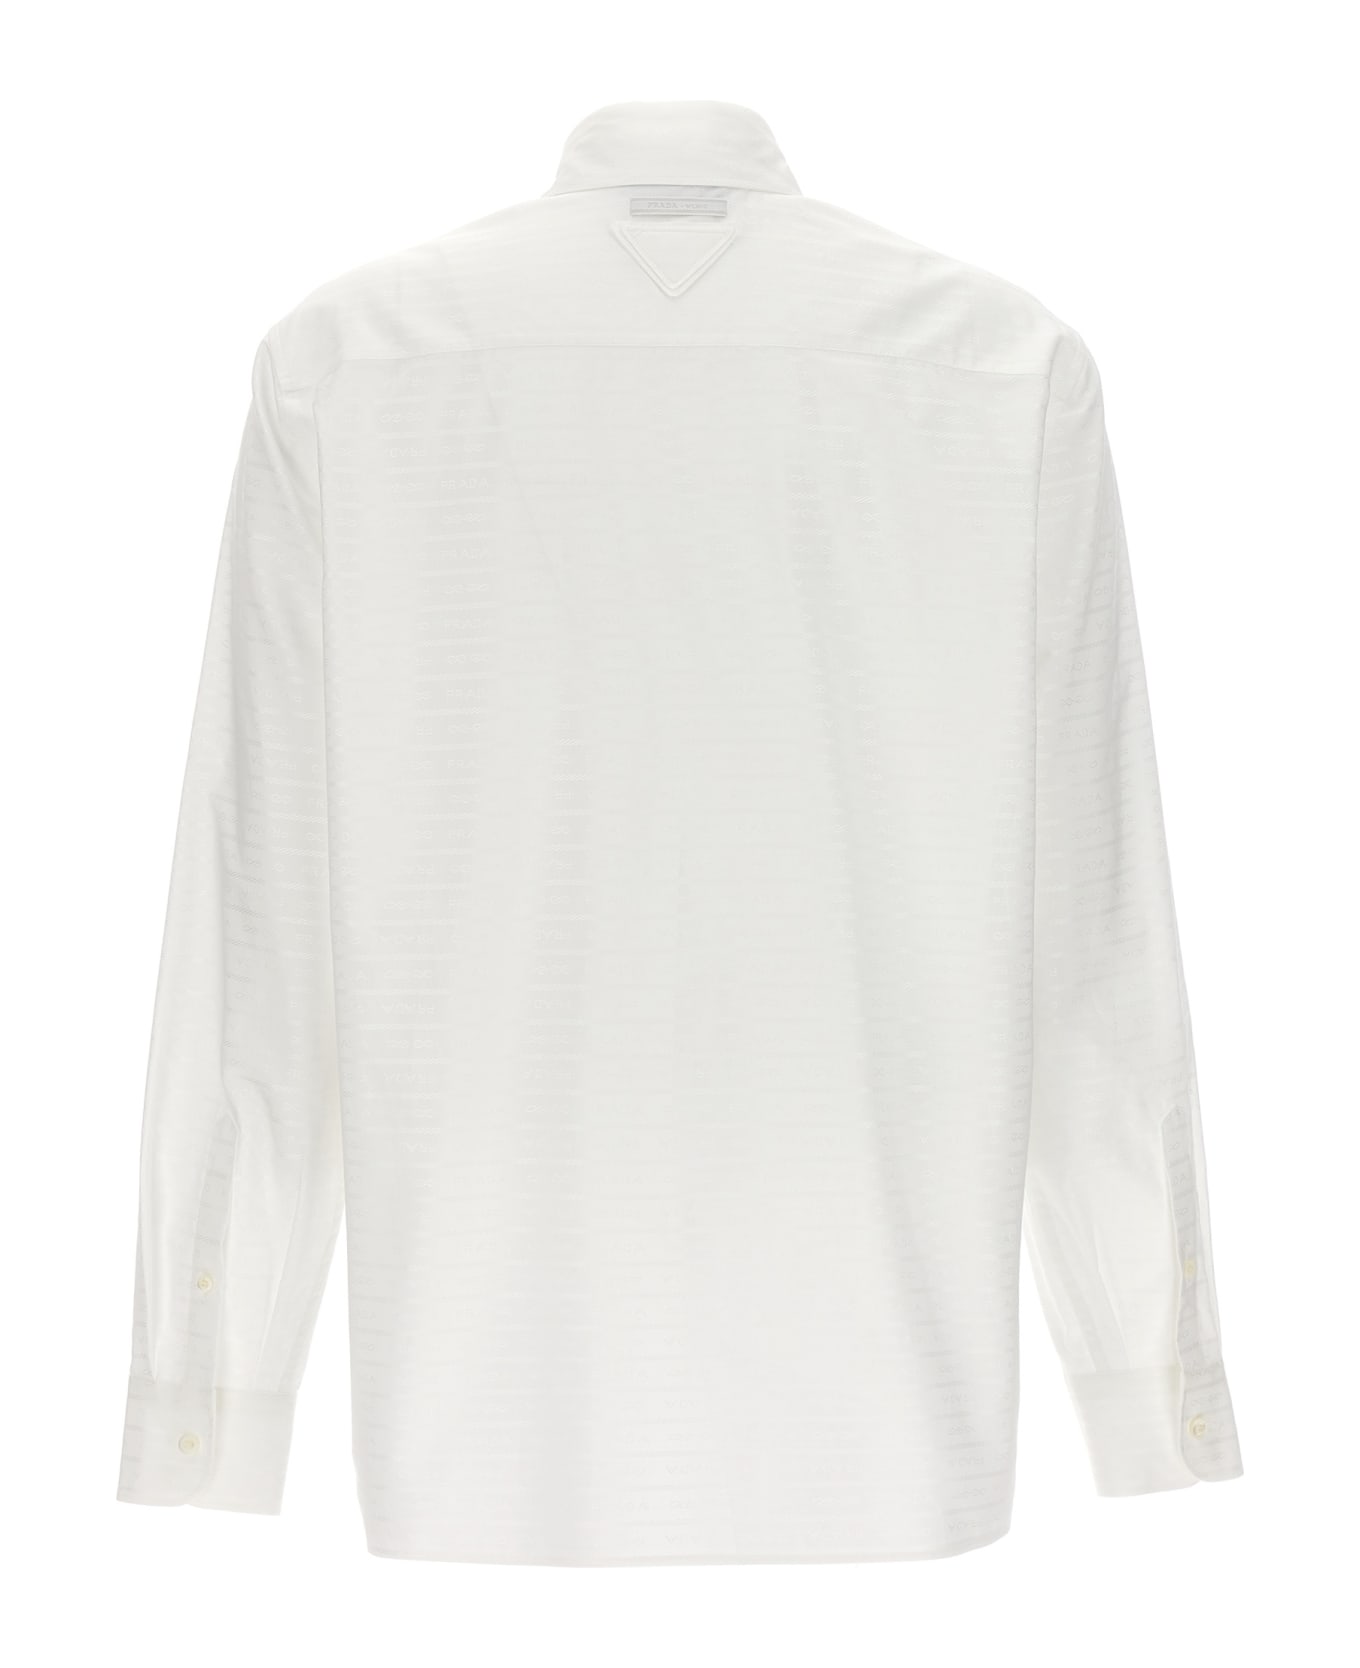 Prada Jacquard Logo Shirt - Bianco